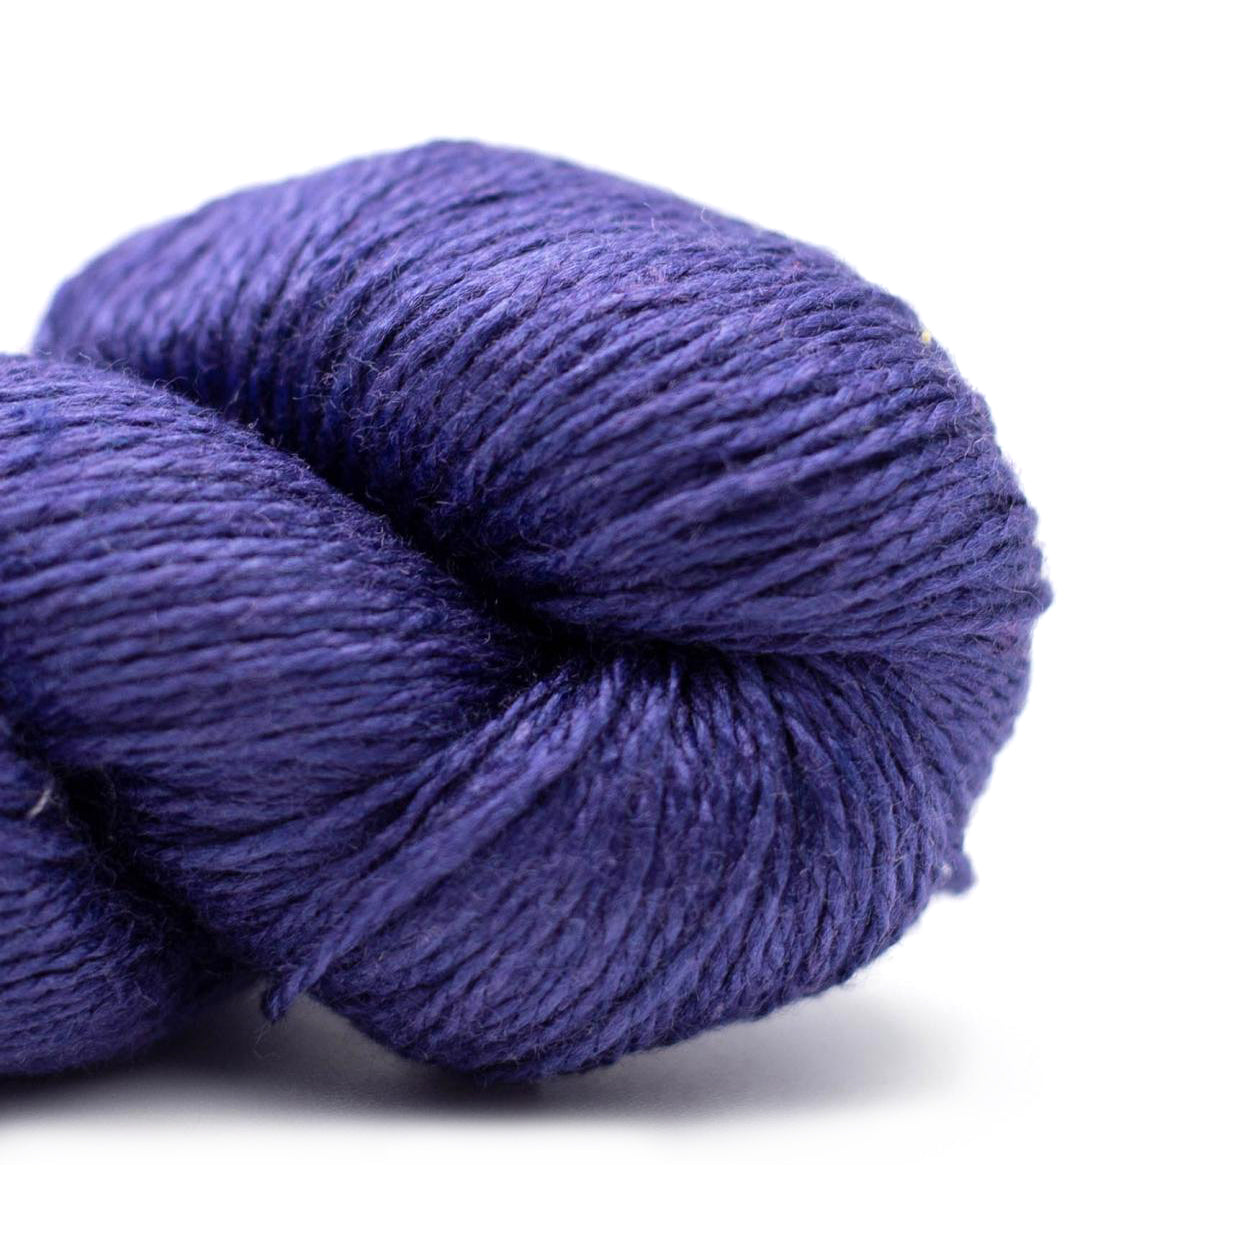 1,4 Kgs Woolyarn Merino Color Melanite Black Nm 15/2 Flat Knitting Thread  on a Cone 